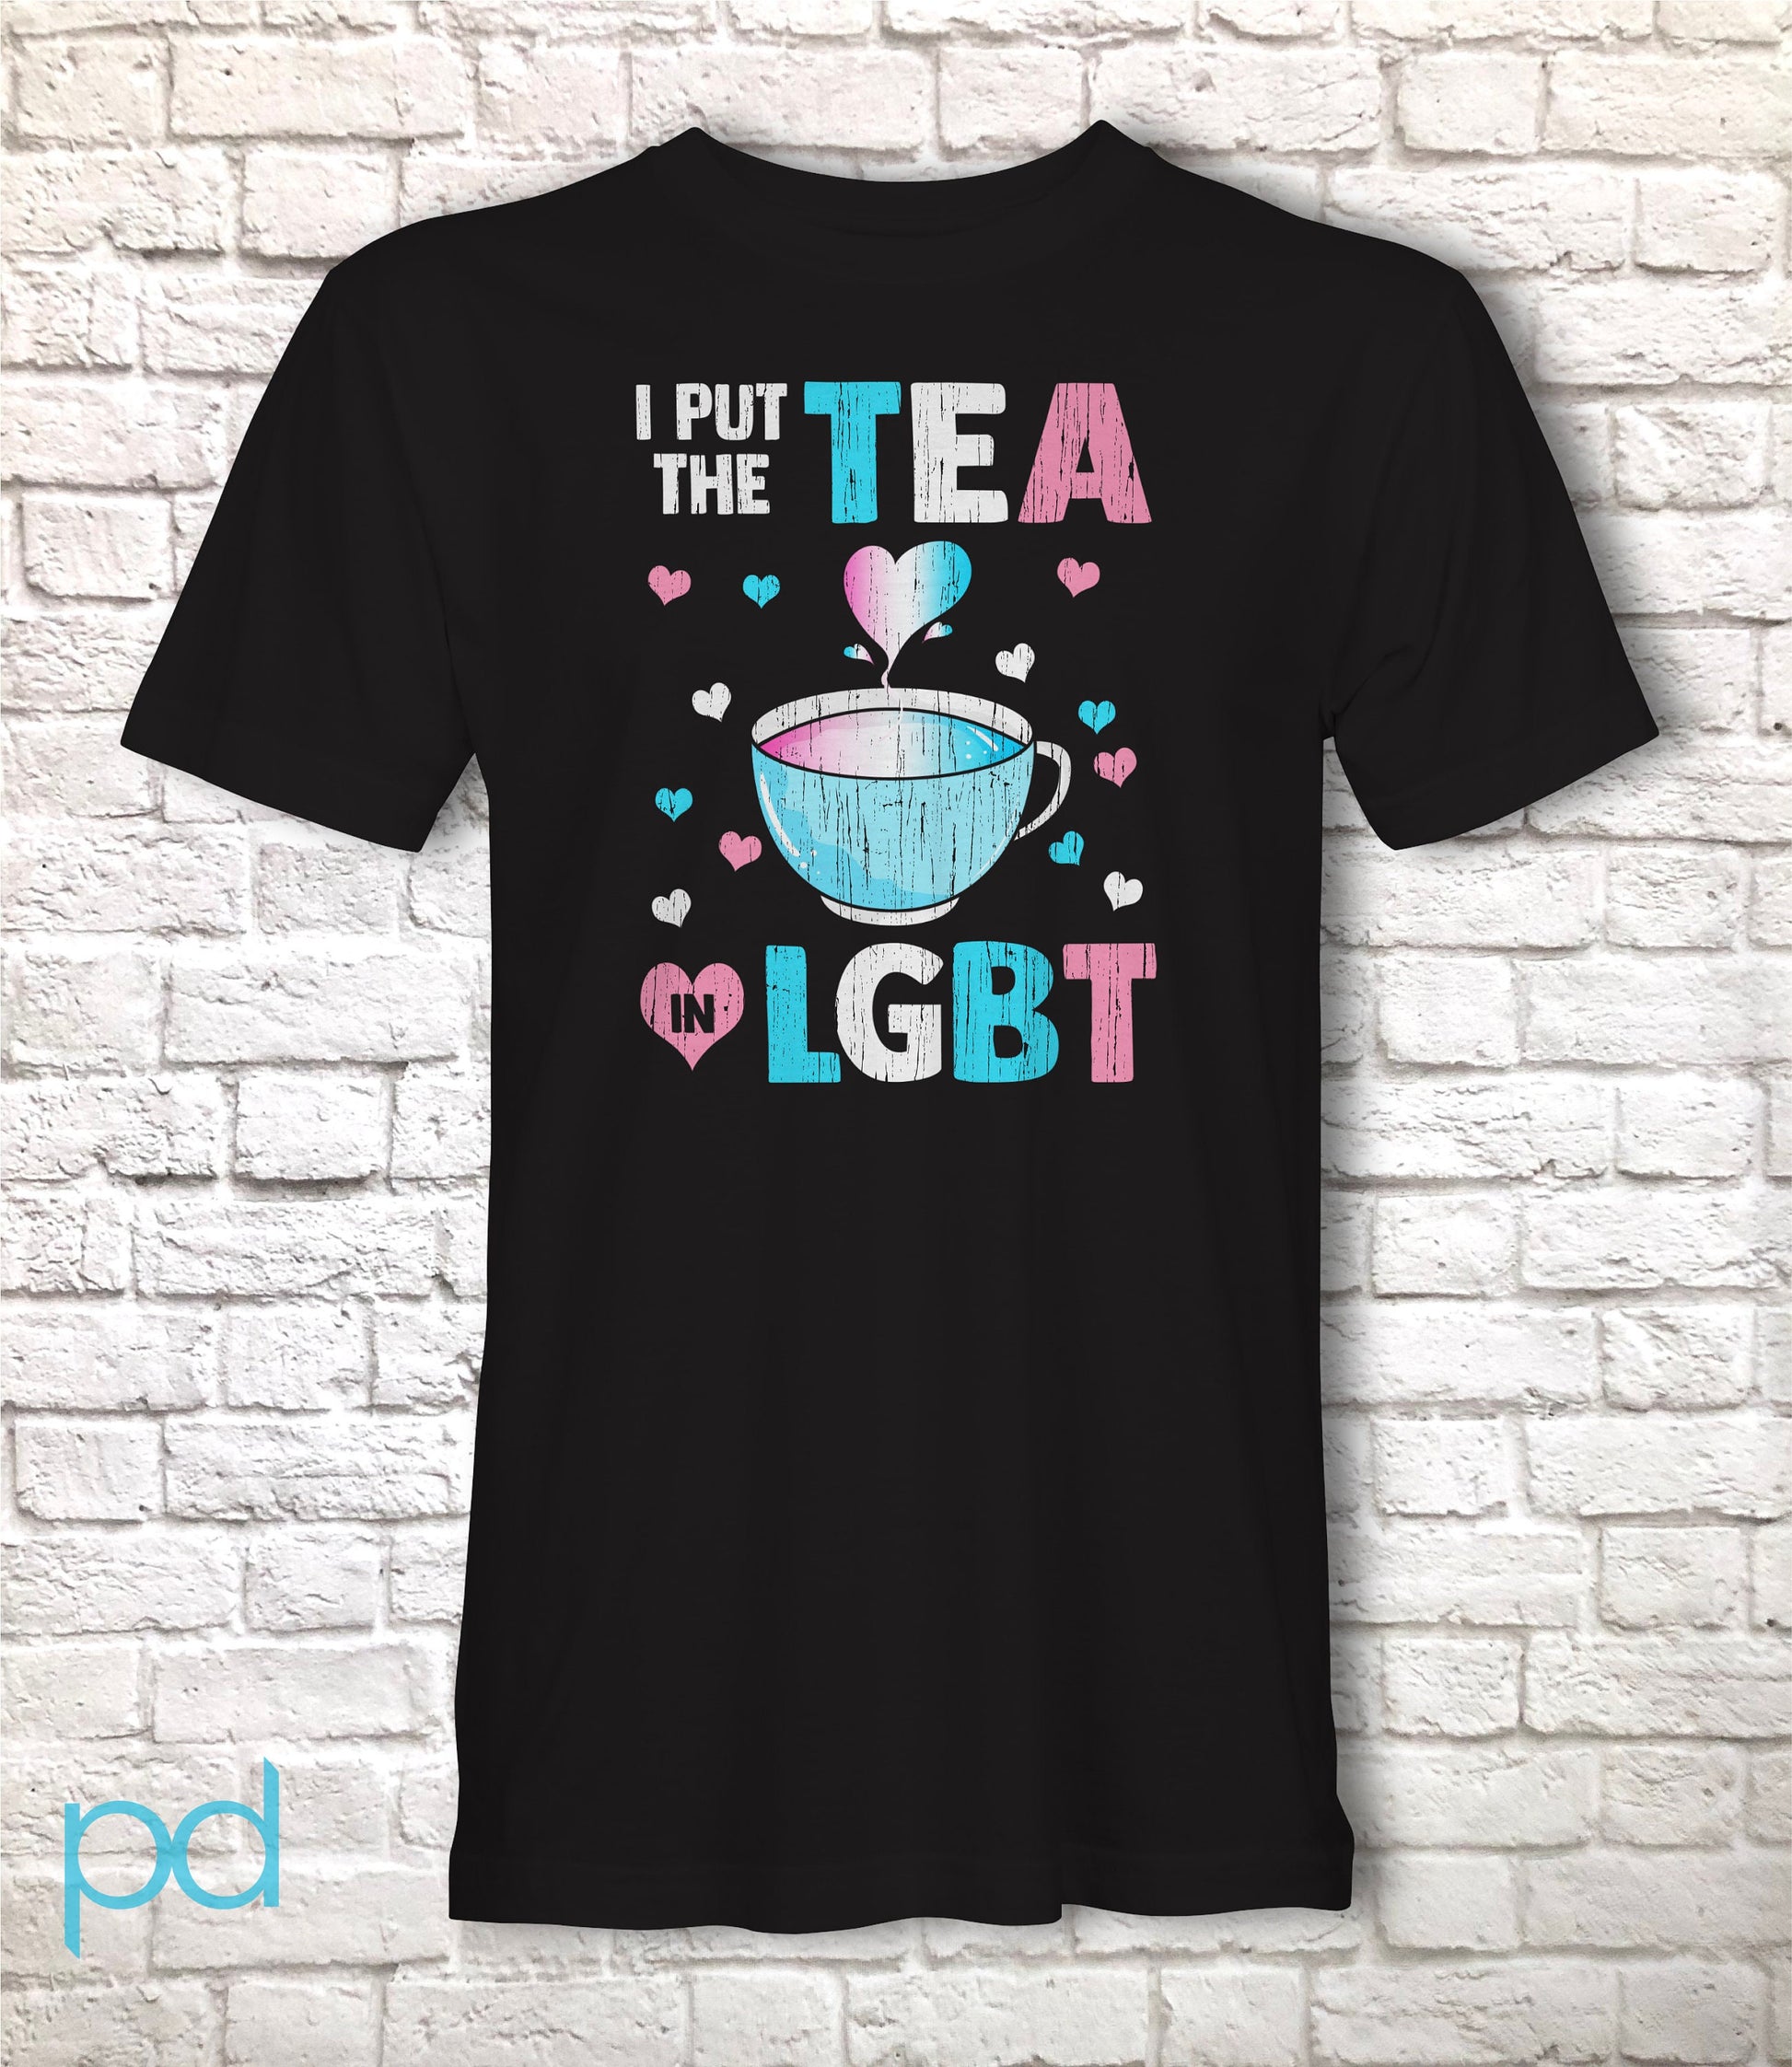 Trans Pride Shirt, Funny Quirky Cute Transgender Gift Idea, Humorous Transgender Flag Clothing Gift T-Shirt, Trans Humor Tshirt